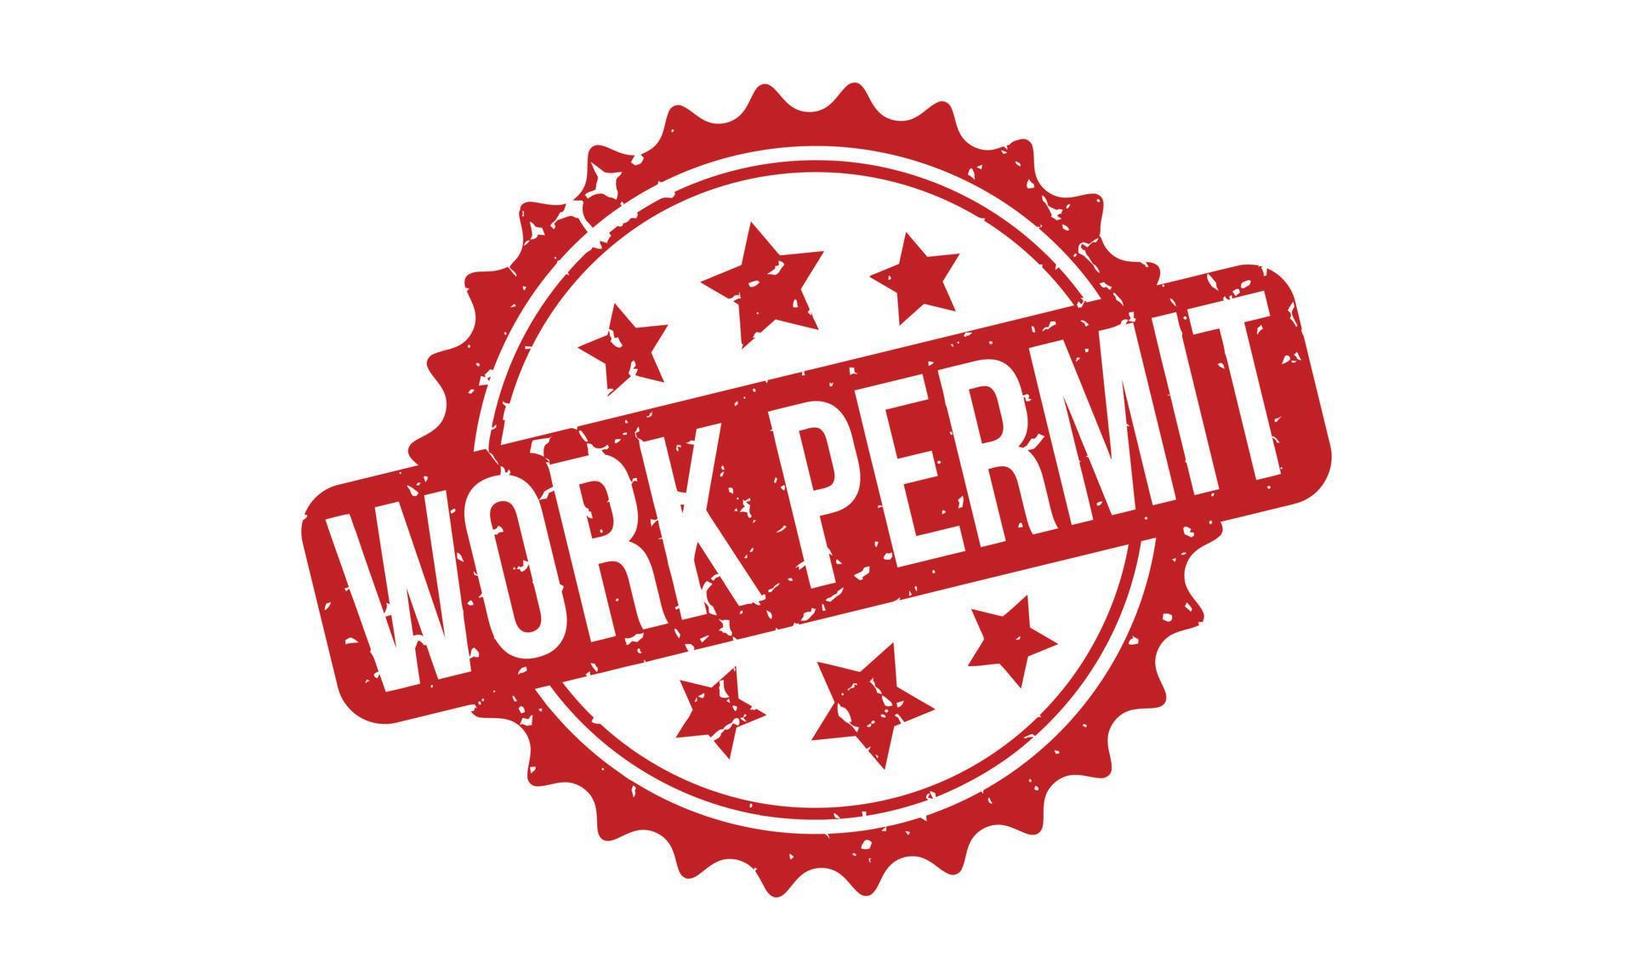 Work Permit Rubber Stamp. Red Work Permit Rubber Grunge Stamp Seal Vector Illustration - Vector